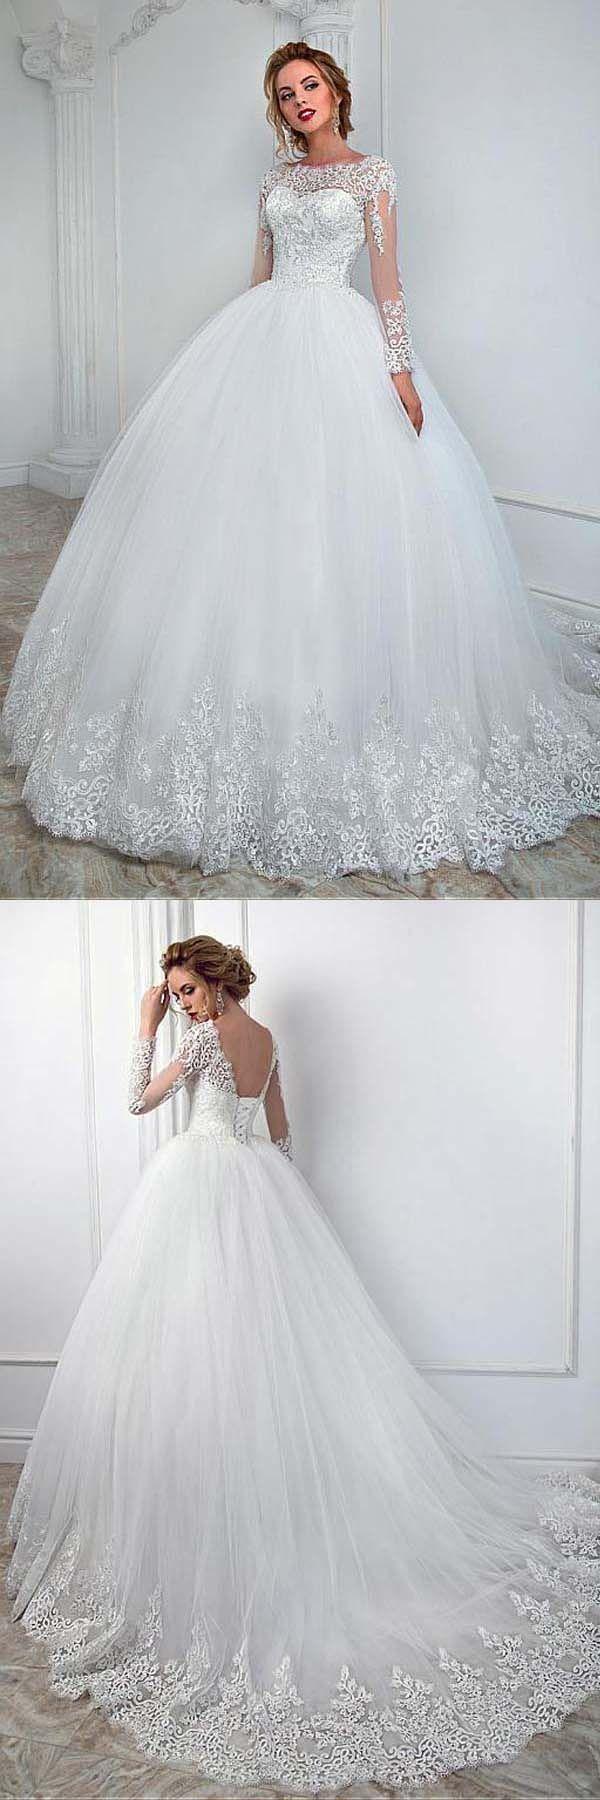 Wedding - Elegant Bateau Neckline Ball Gown Wedding Dress With Lace Appliques WD193